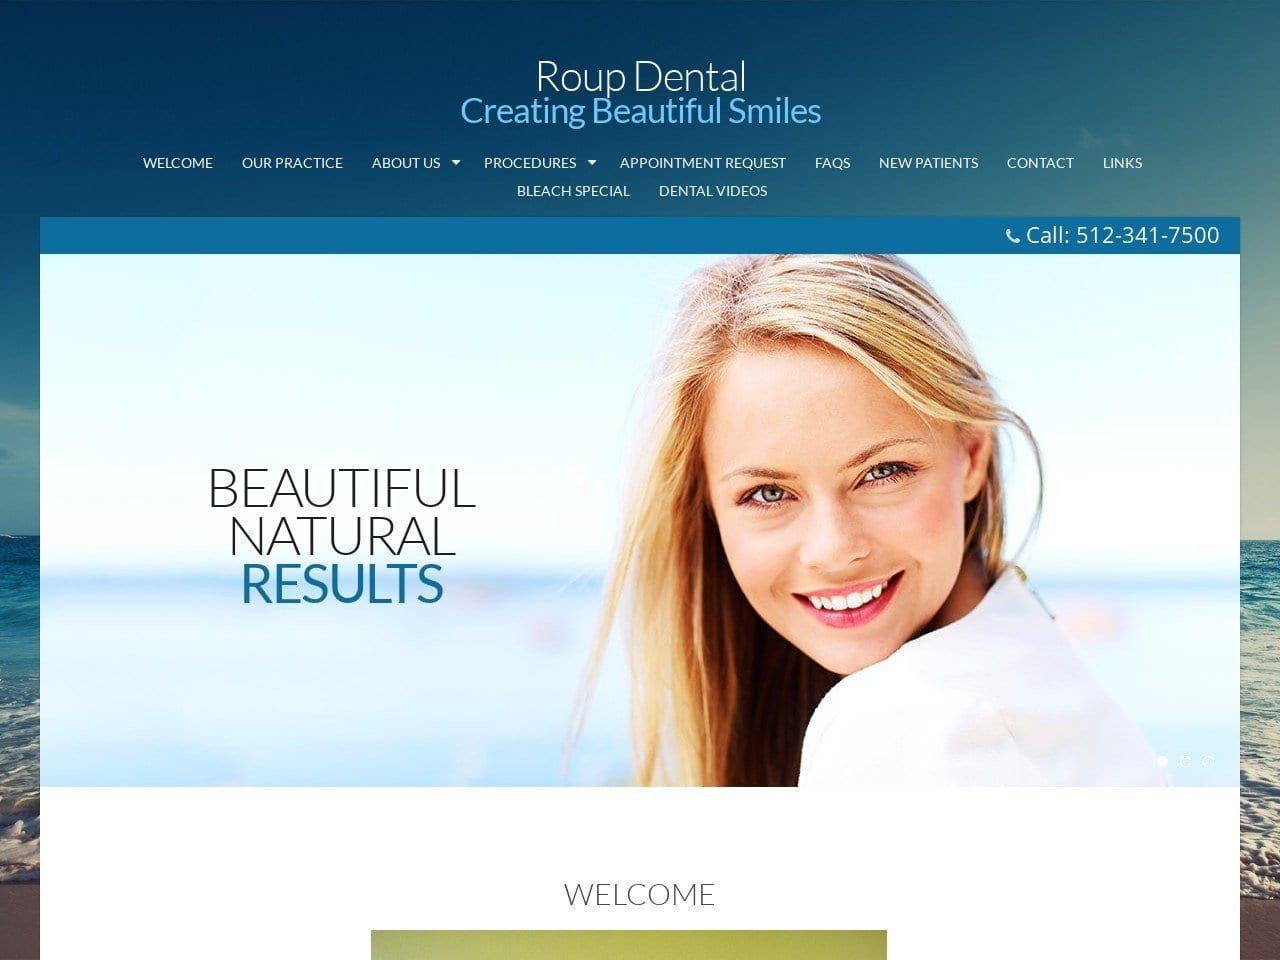 Roup Dental Website Screenshot from roupdental.com